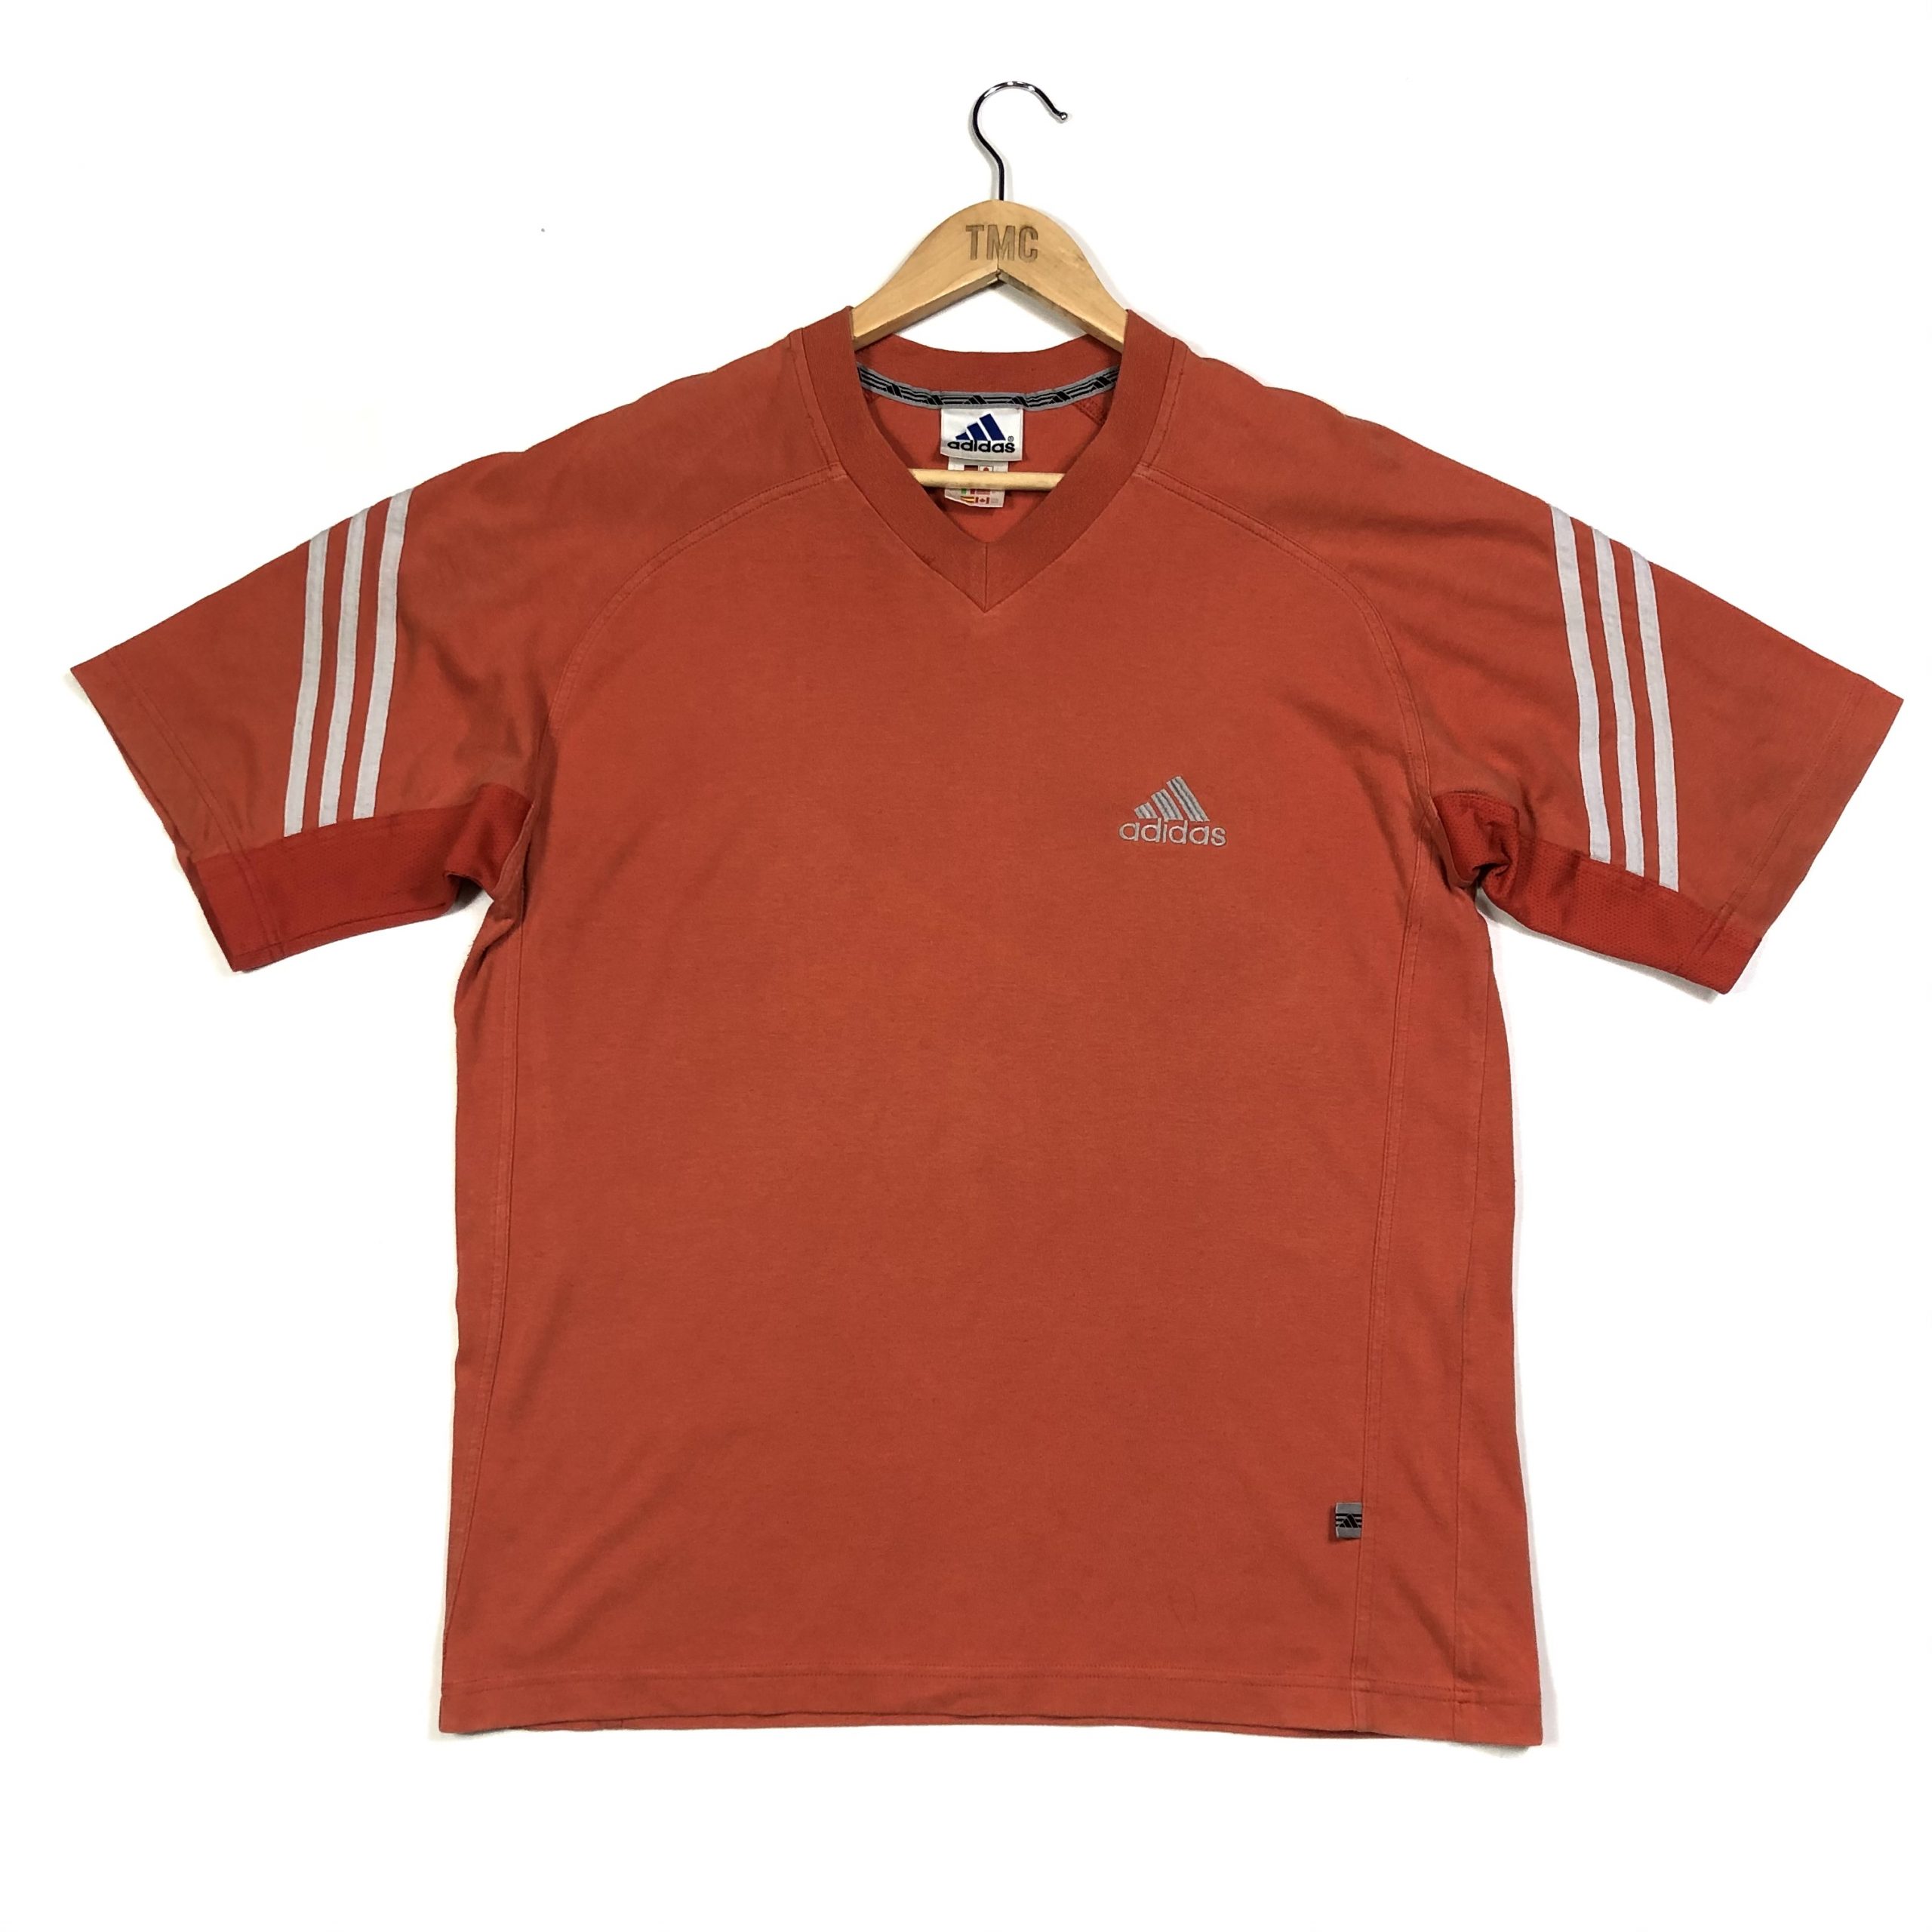 Adidas 3-Stripes T-Shirt - Orange - L - TMC Vintage - Vintage Clothing